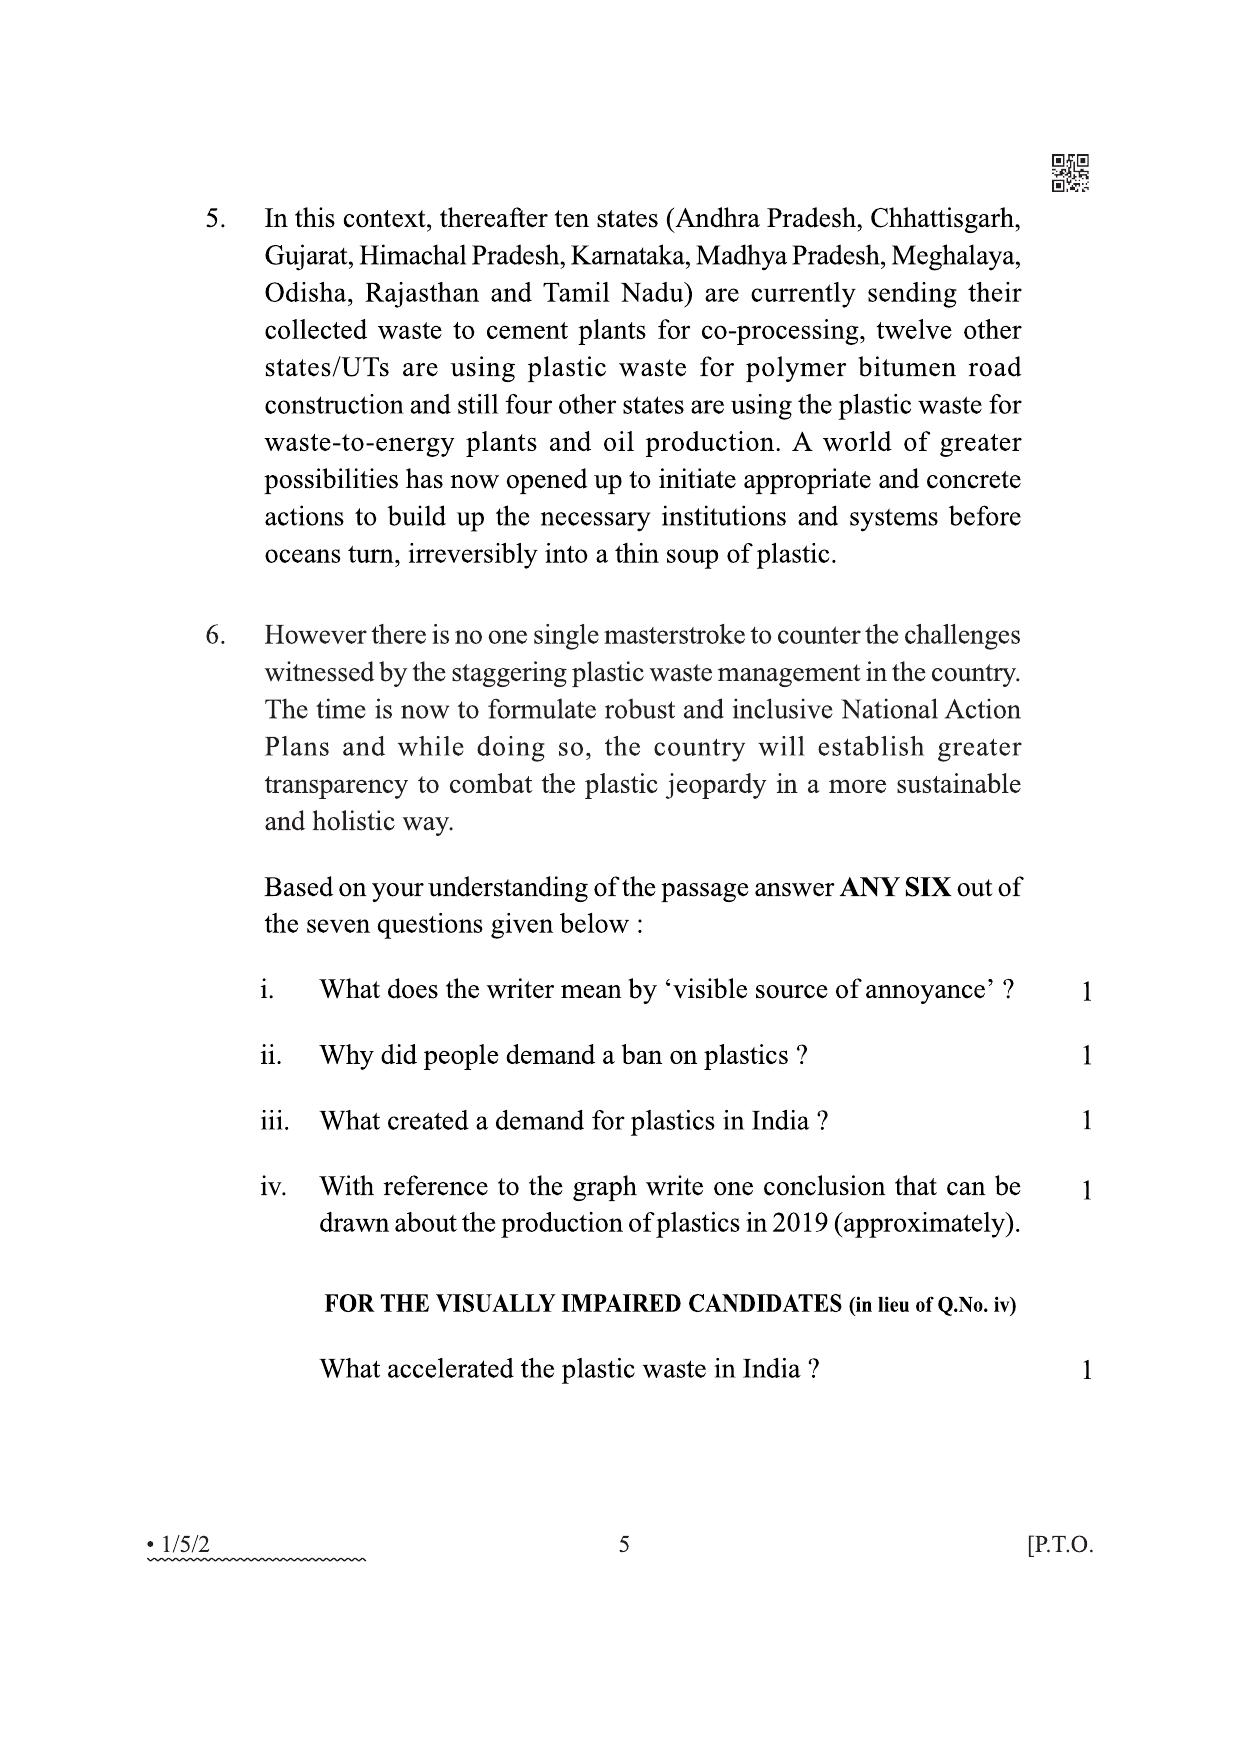 CBSE Class 12 1-5-2 English Core 2022 Question Paper - Page 5